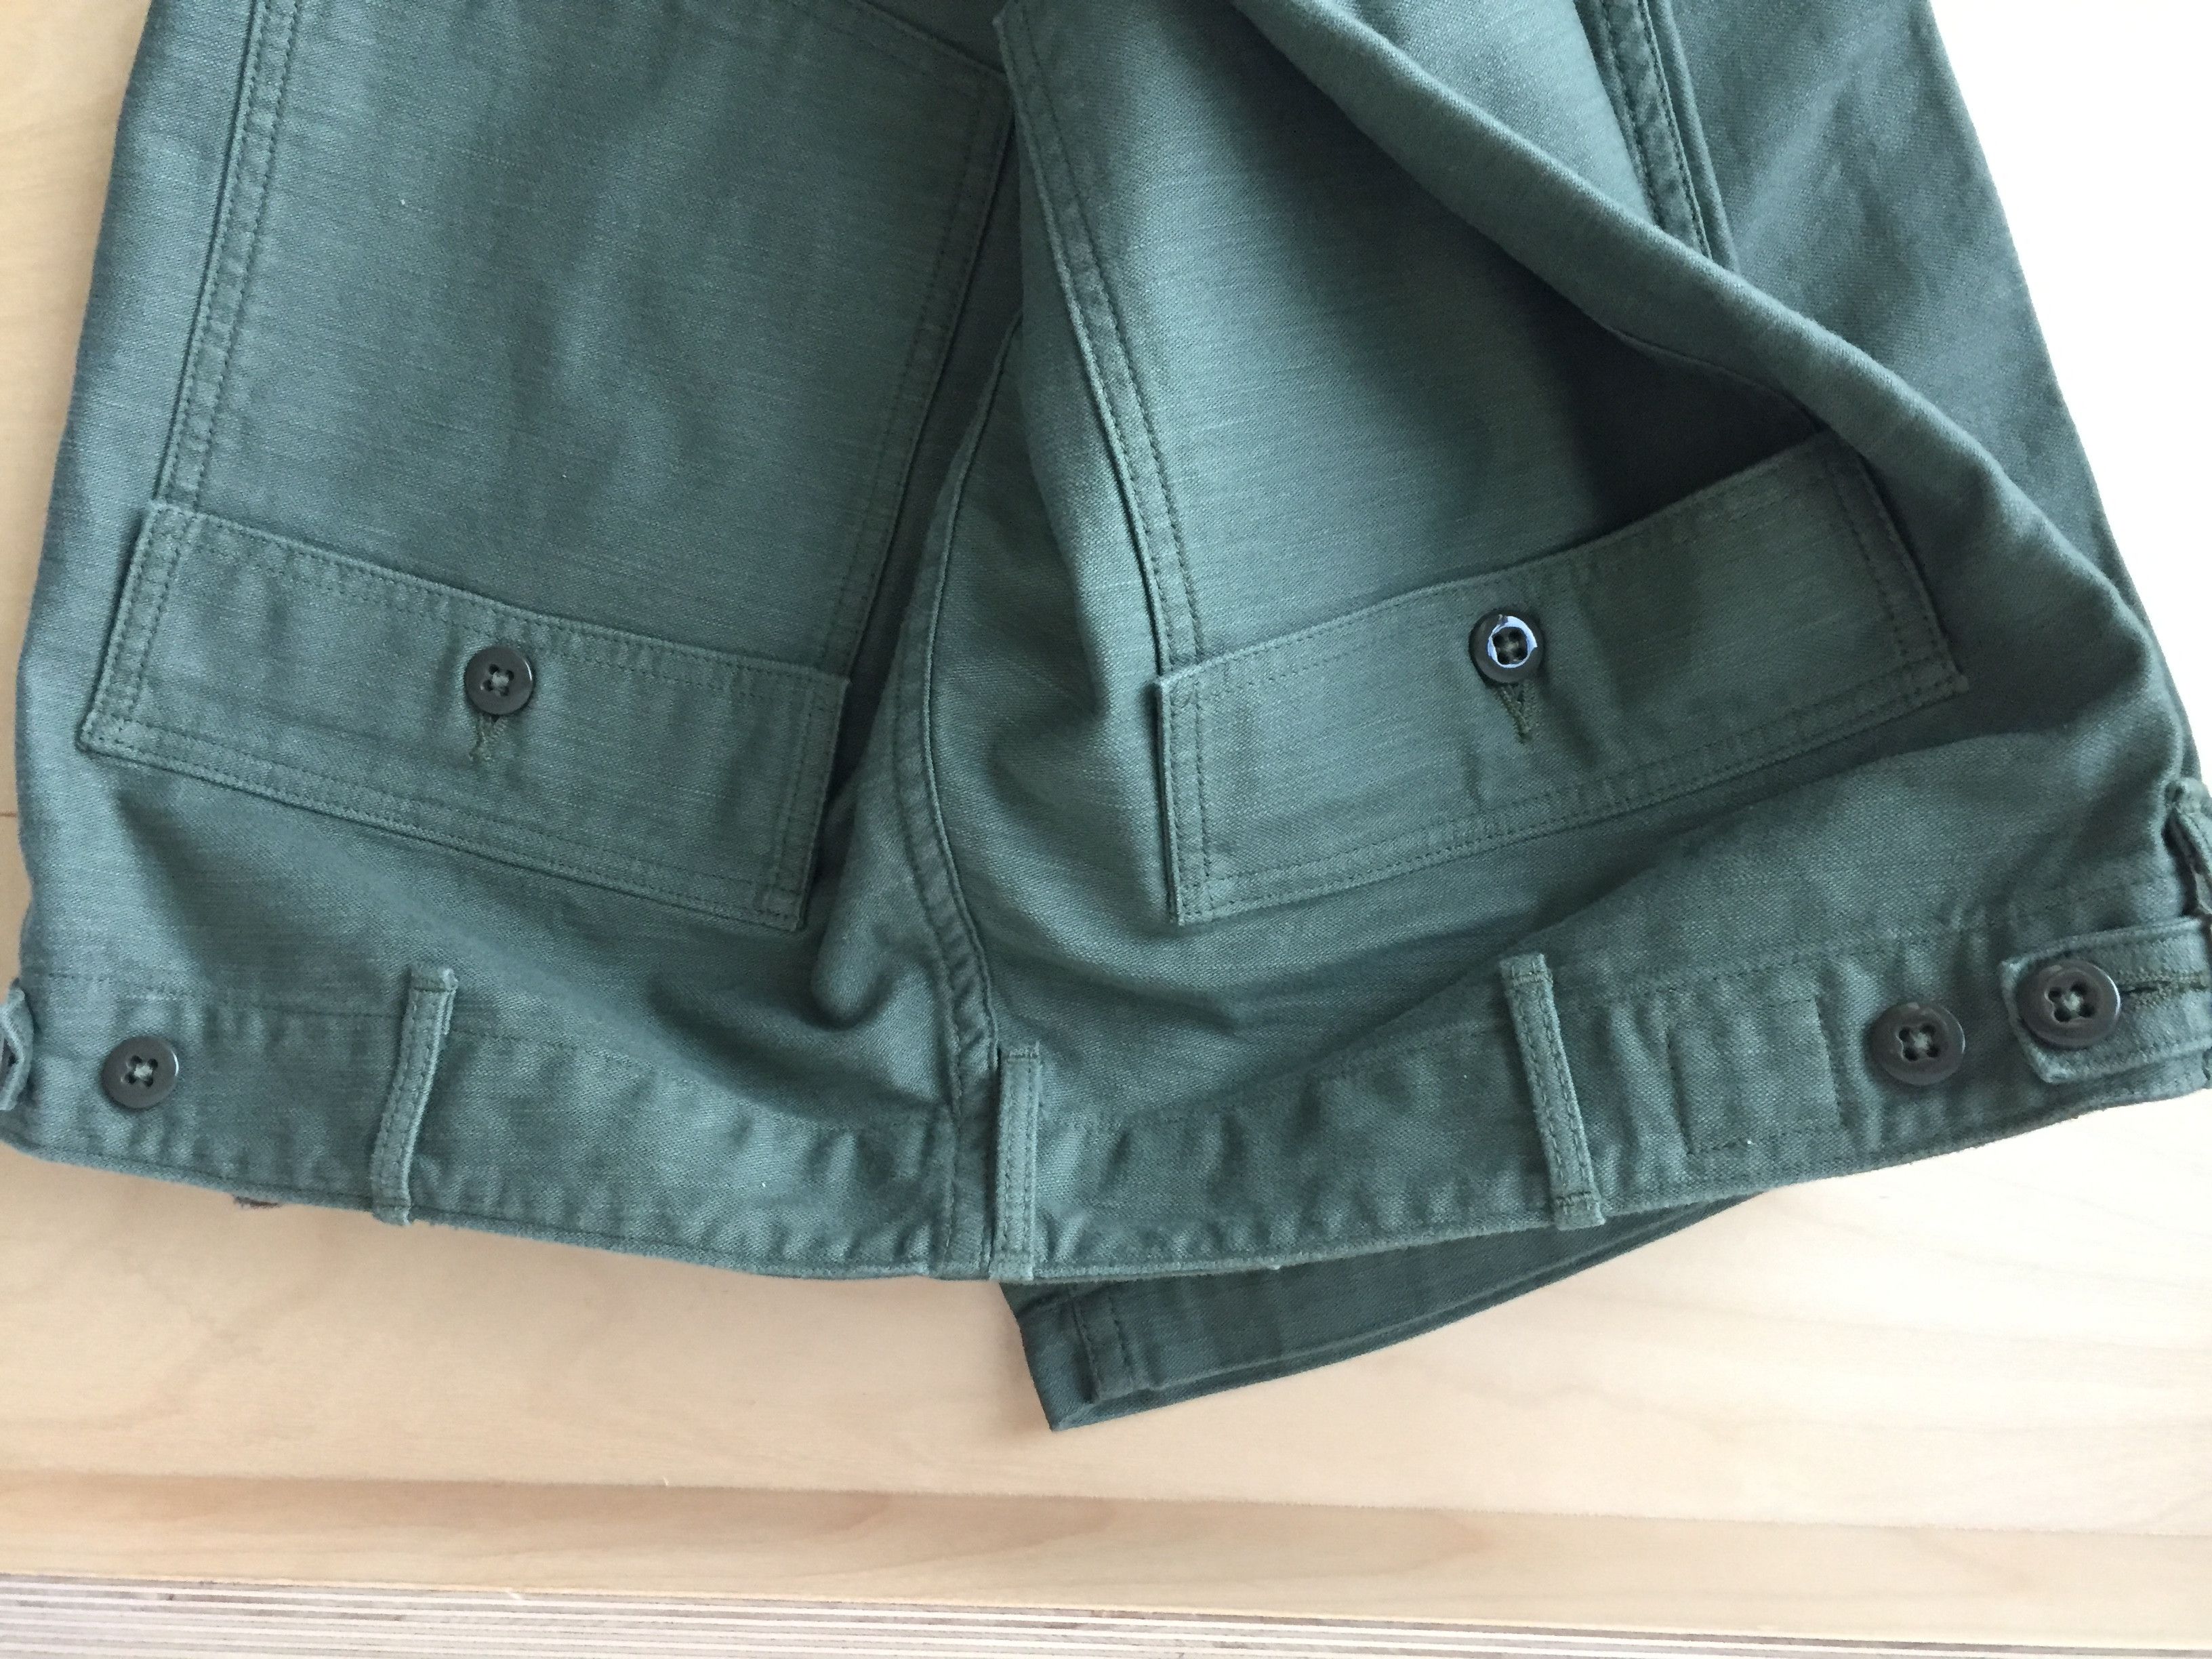 Orslow Army Fatigue Pants (XL) Size US 38 / EU 54 - 3 Thumbnail